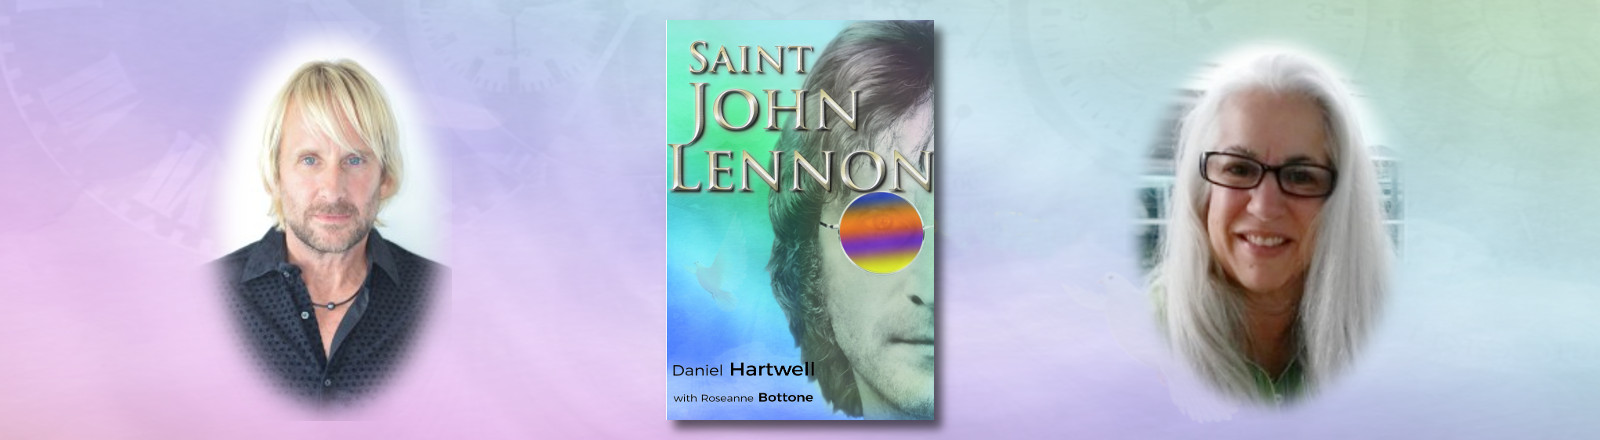 saint john lennon time travel adventure about peace